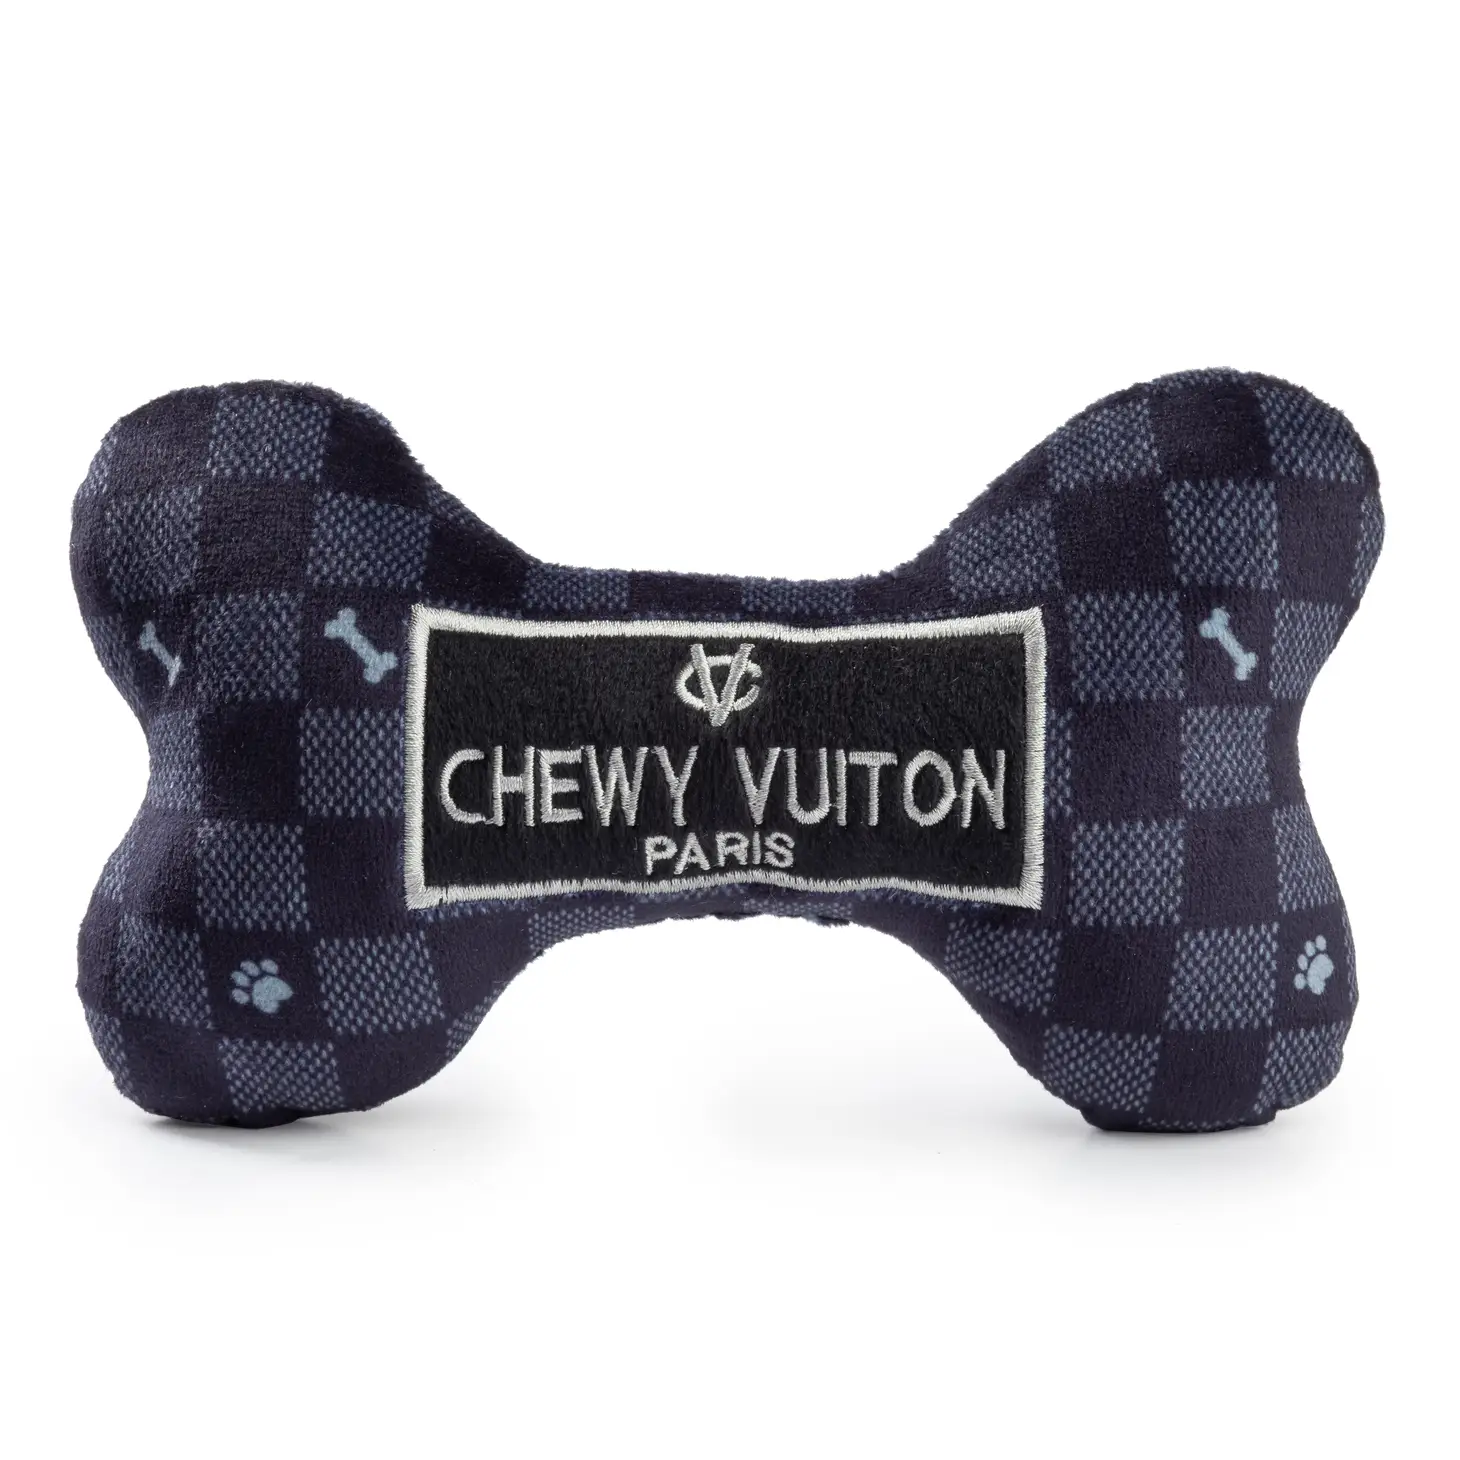 Black Chewy Vuiton Checker Bone - Danshire Market and Design 